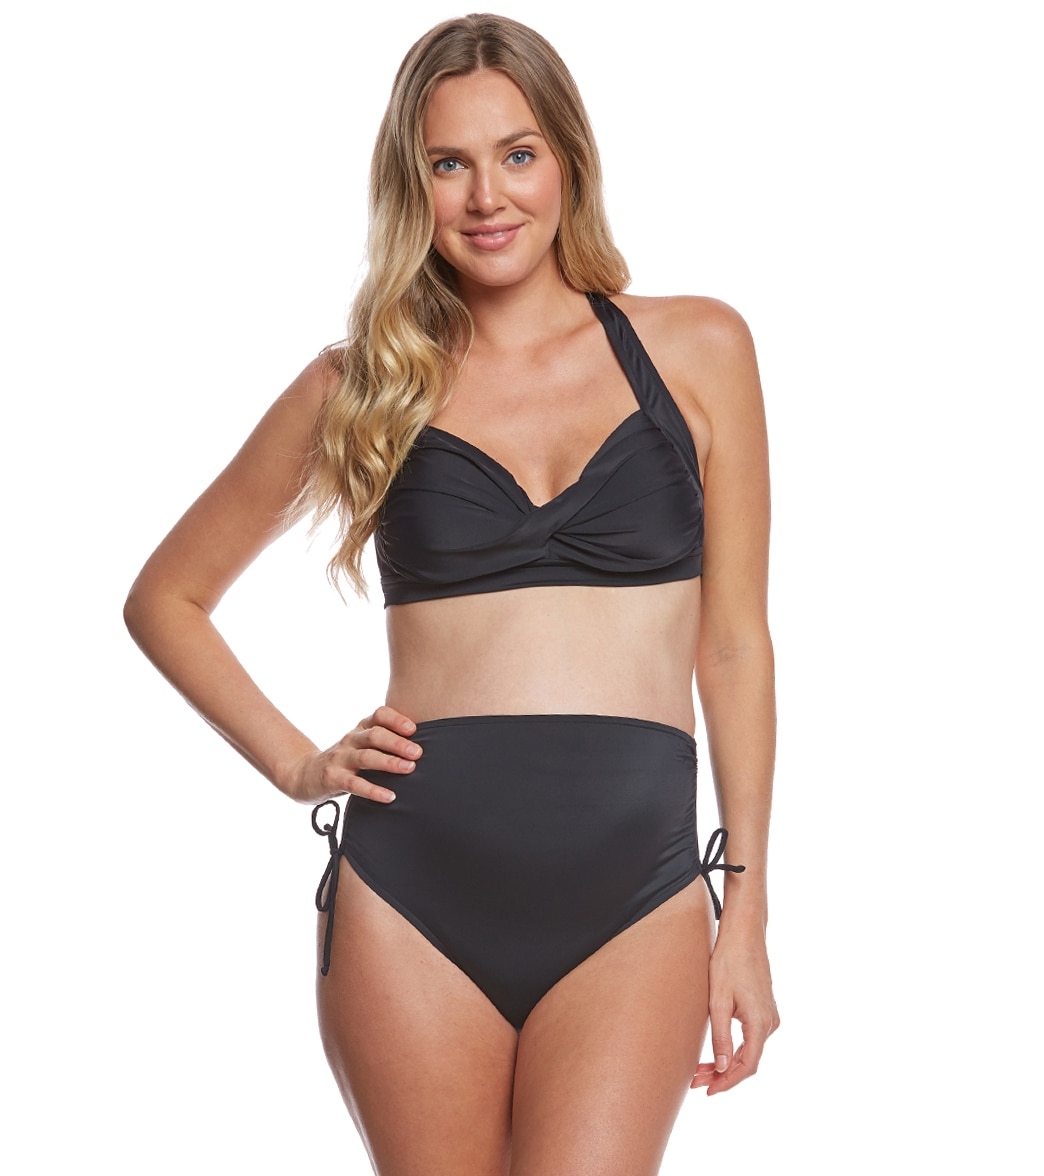 Prego Maternity Swimwear Solid Bombshell Bikini Set - Black Large - Swimoutlet.com